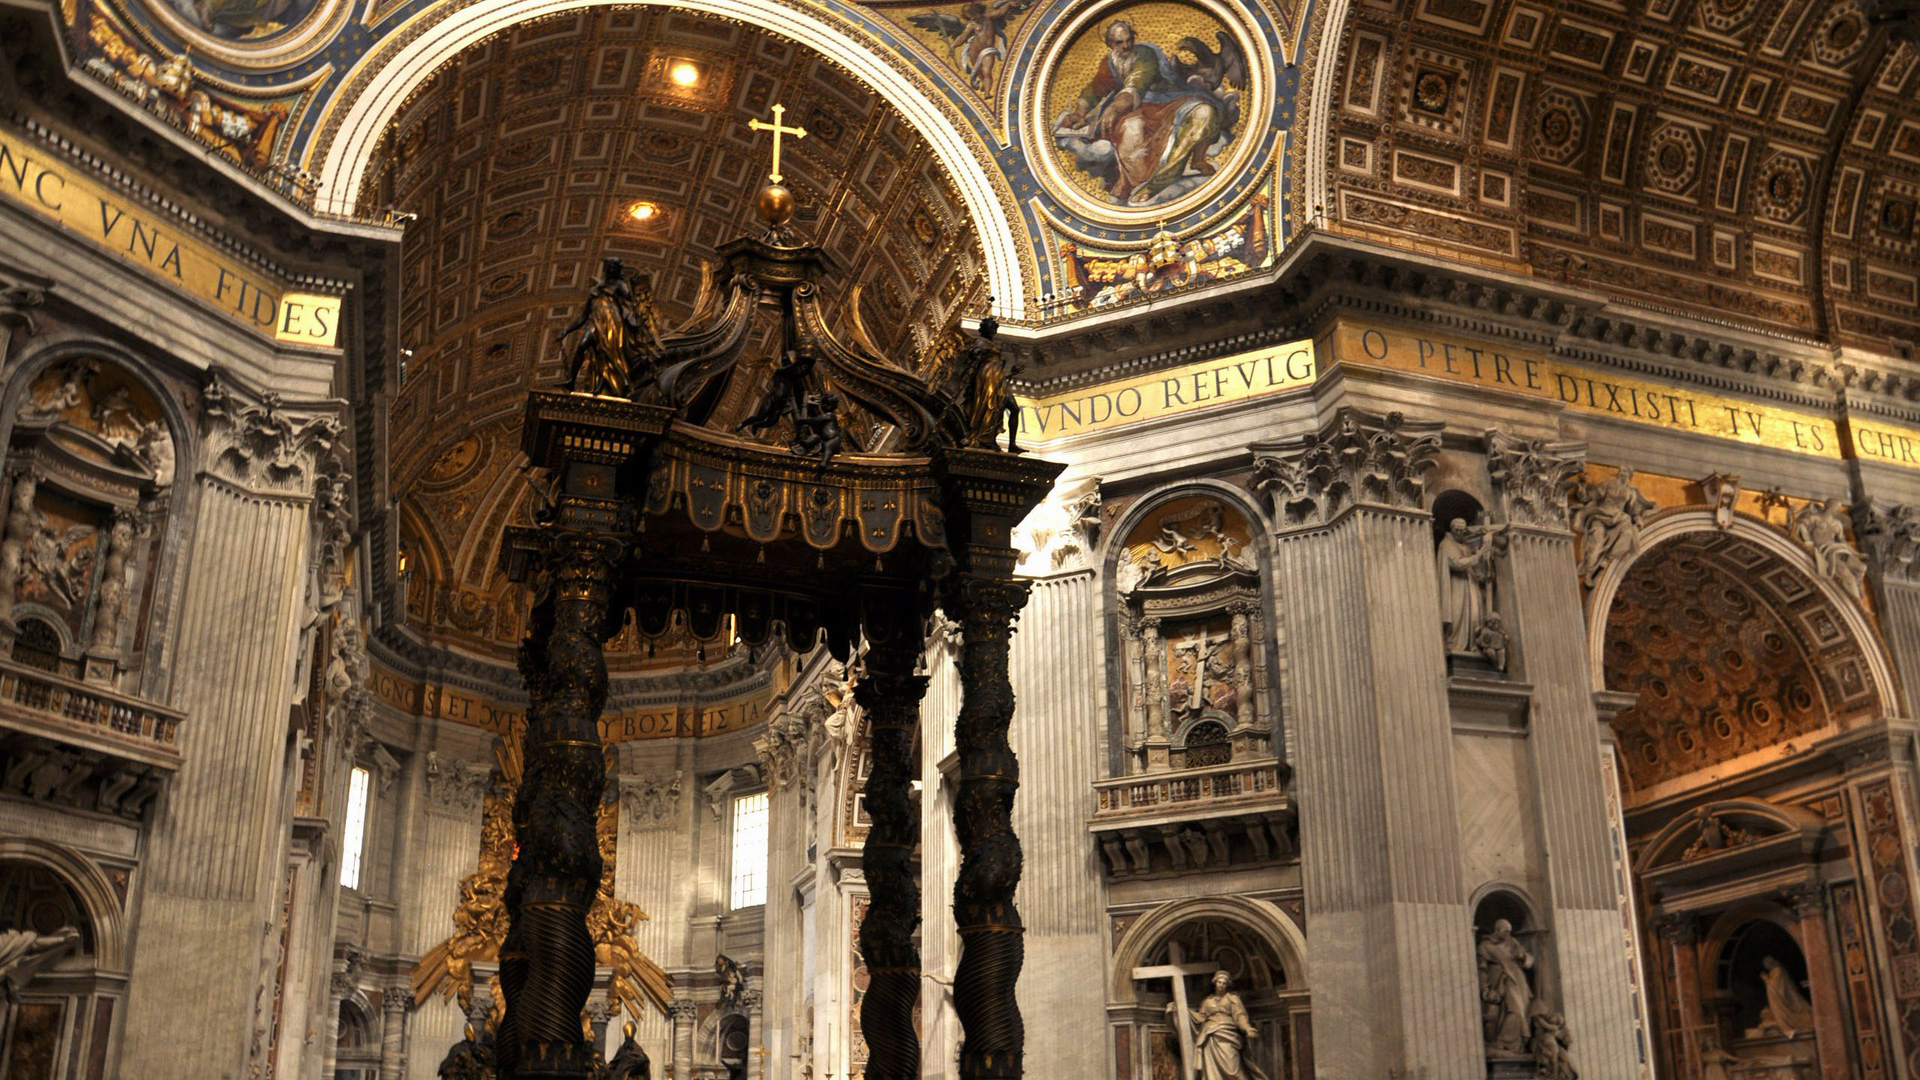 High Altar inside St. Peter's Basilica, Vatican City, Vatican City